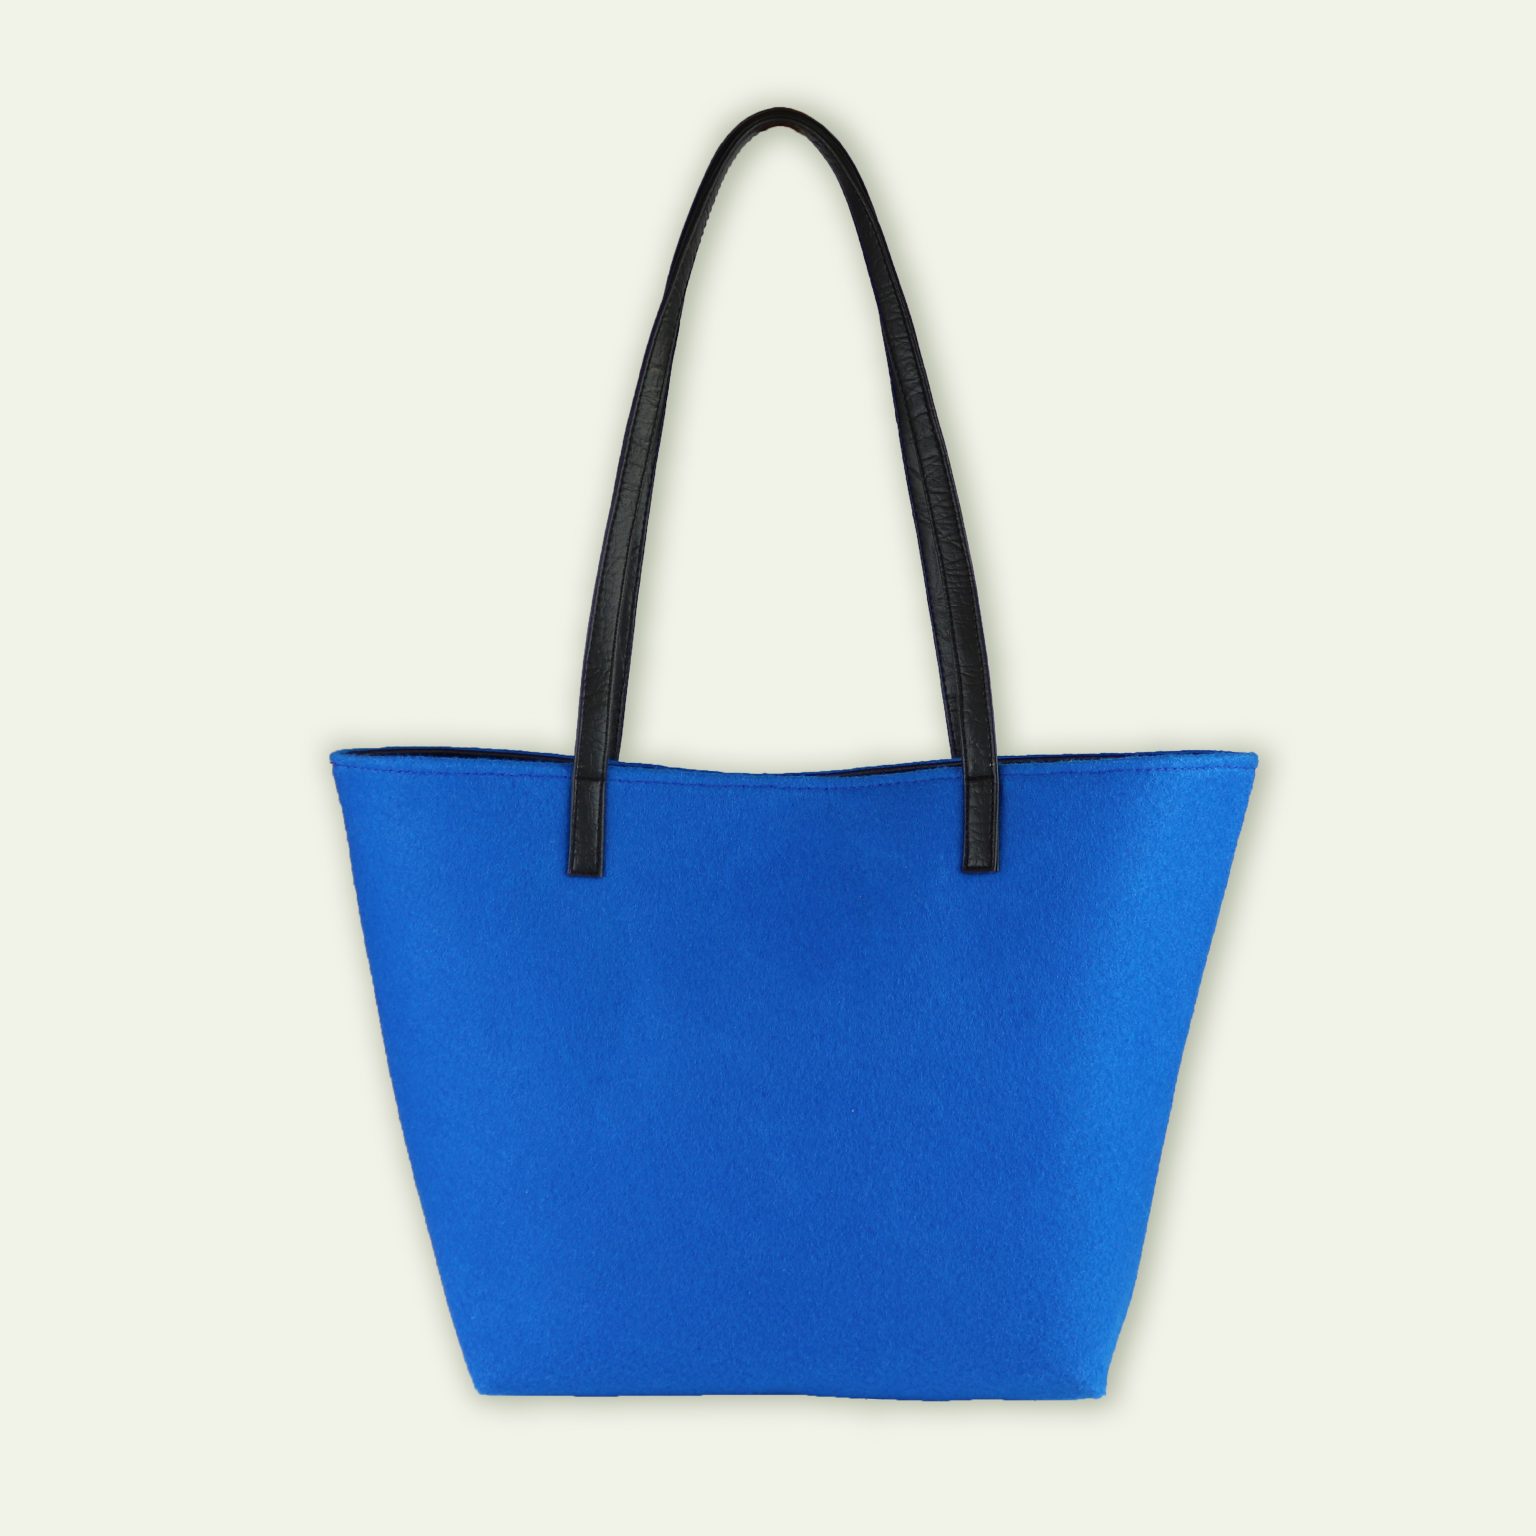 Bolso Elegante de Moqueta Reciclada en Azul. Moda Sostenible